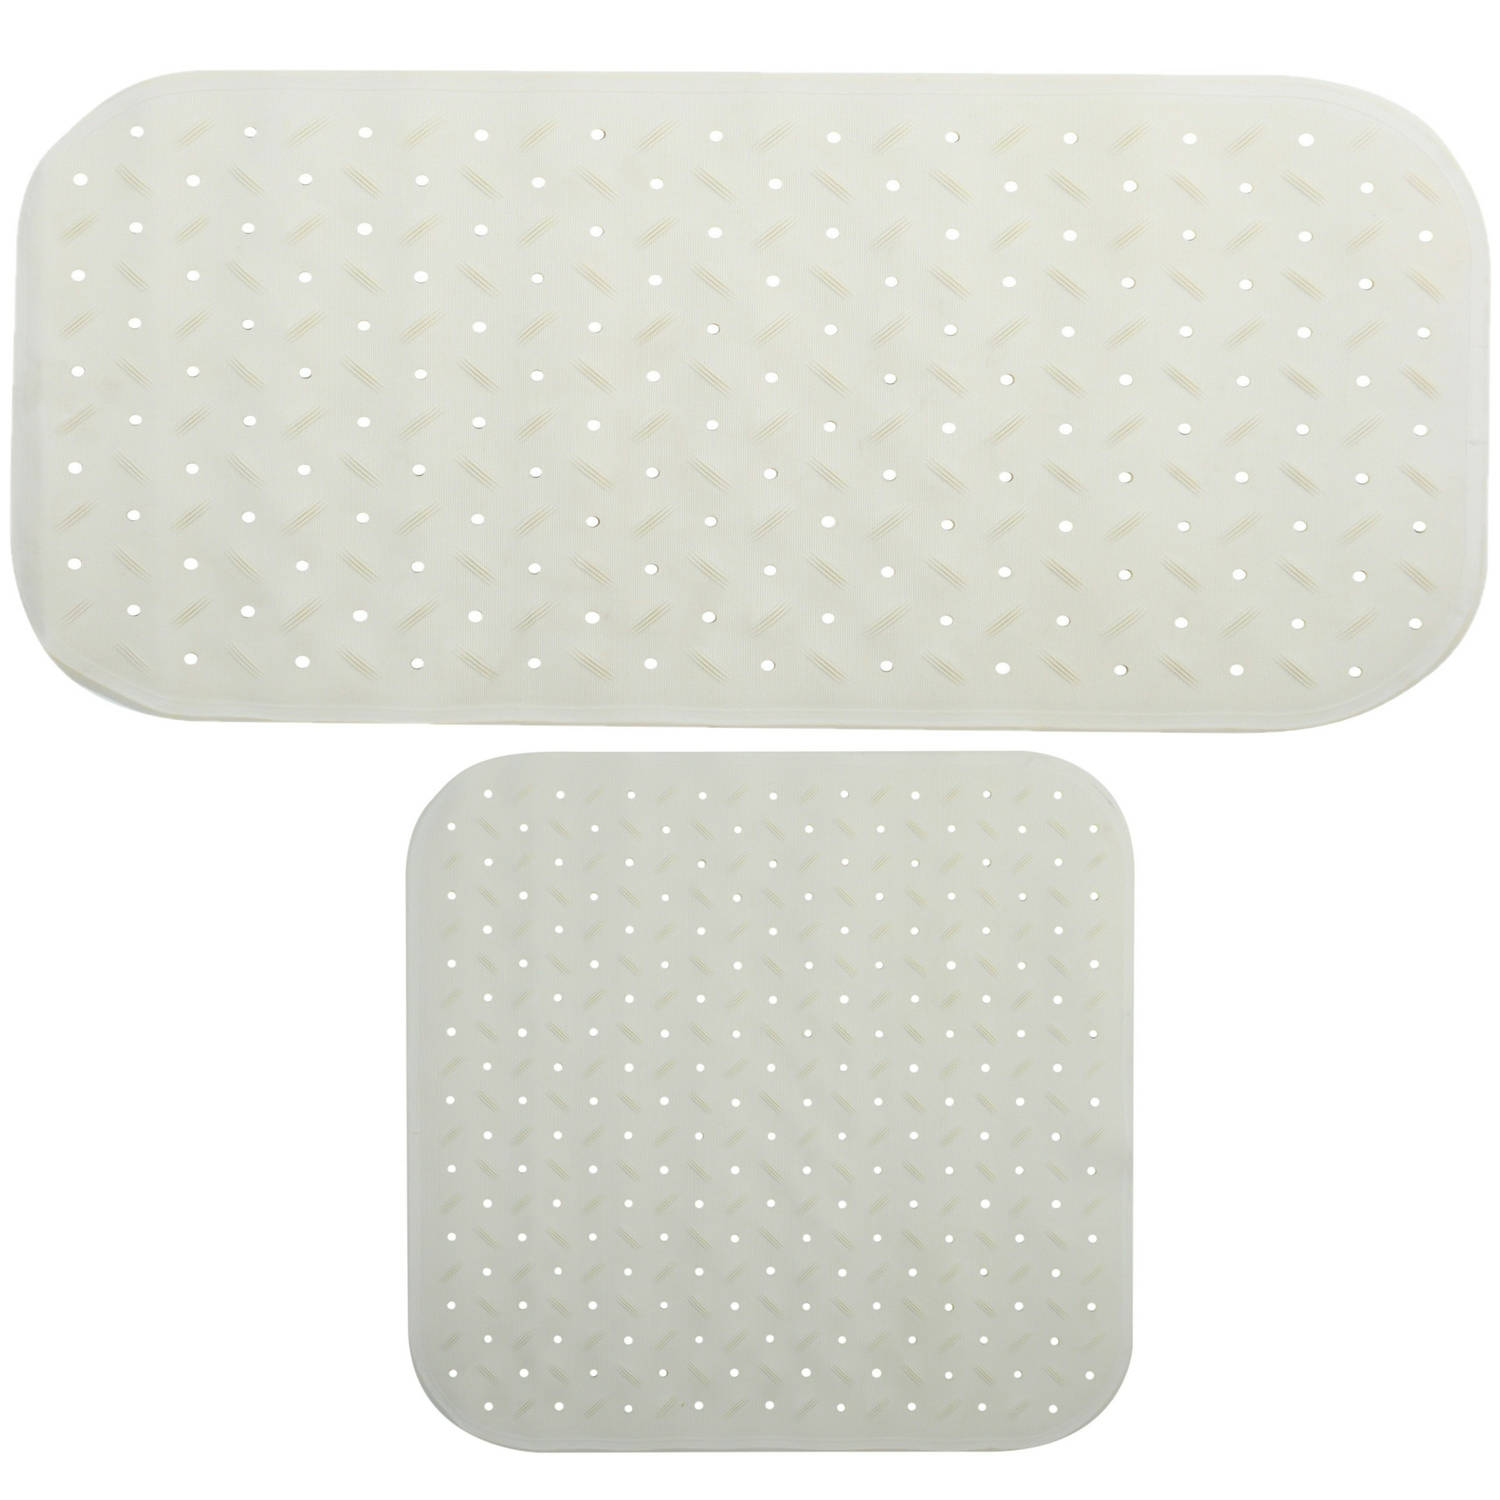 MSV Douche-bad anti-slip matten set badkamer rubber 2x stuks wit 2 formaten Badmatjes